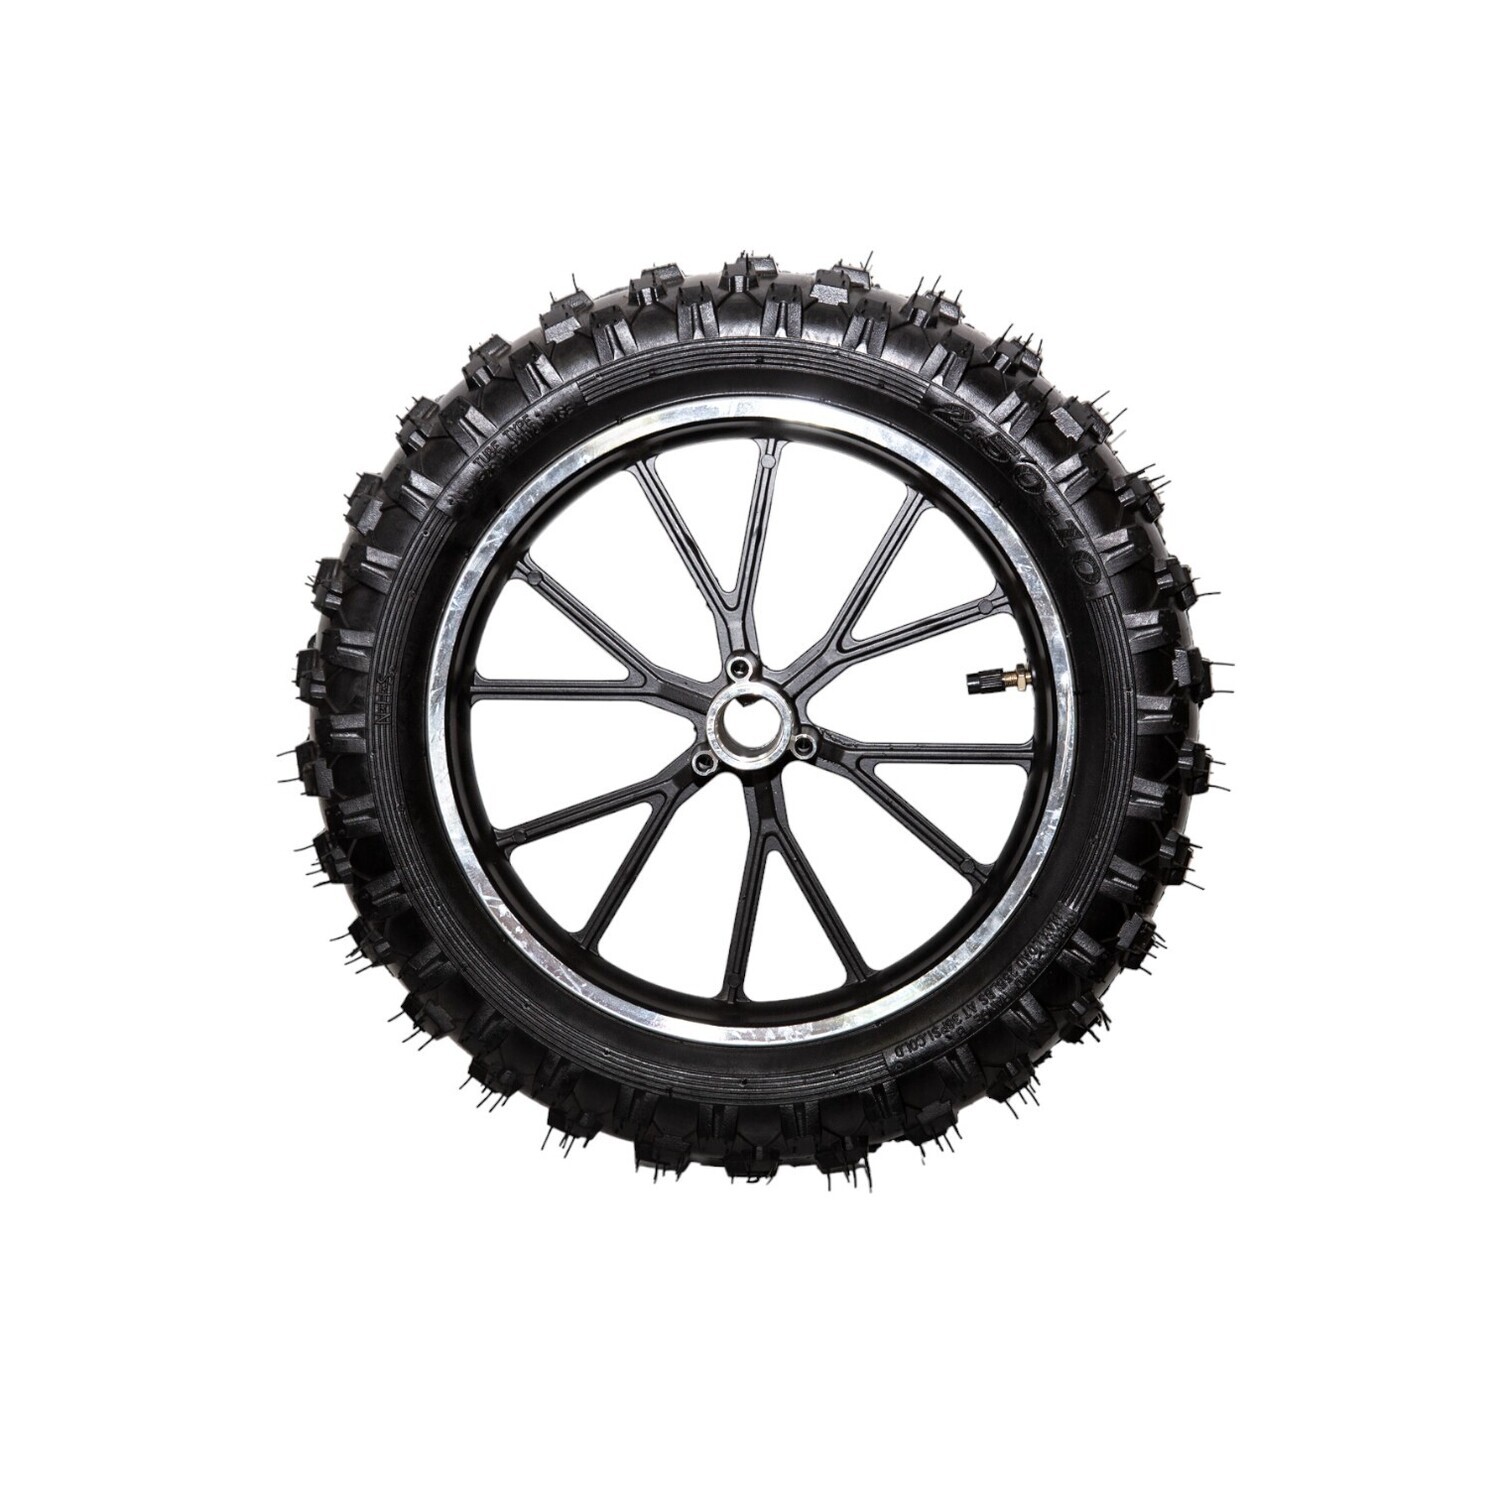 Front 49cc 10" Dirt Bike Wheel 2.50-10